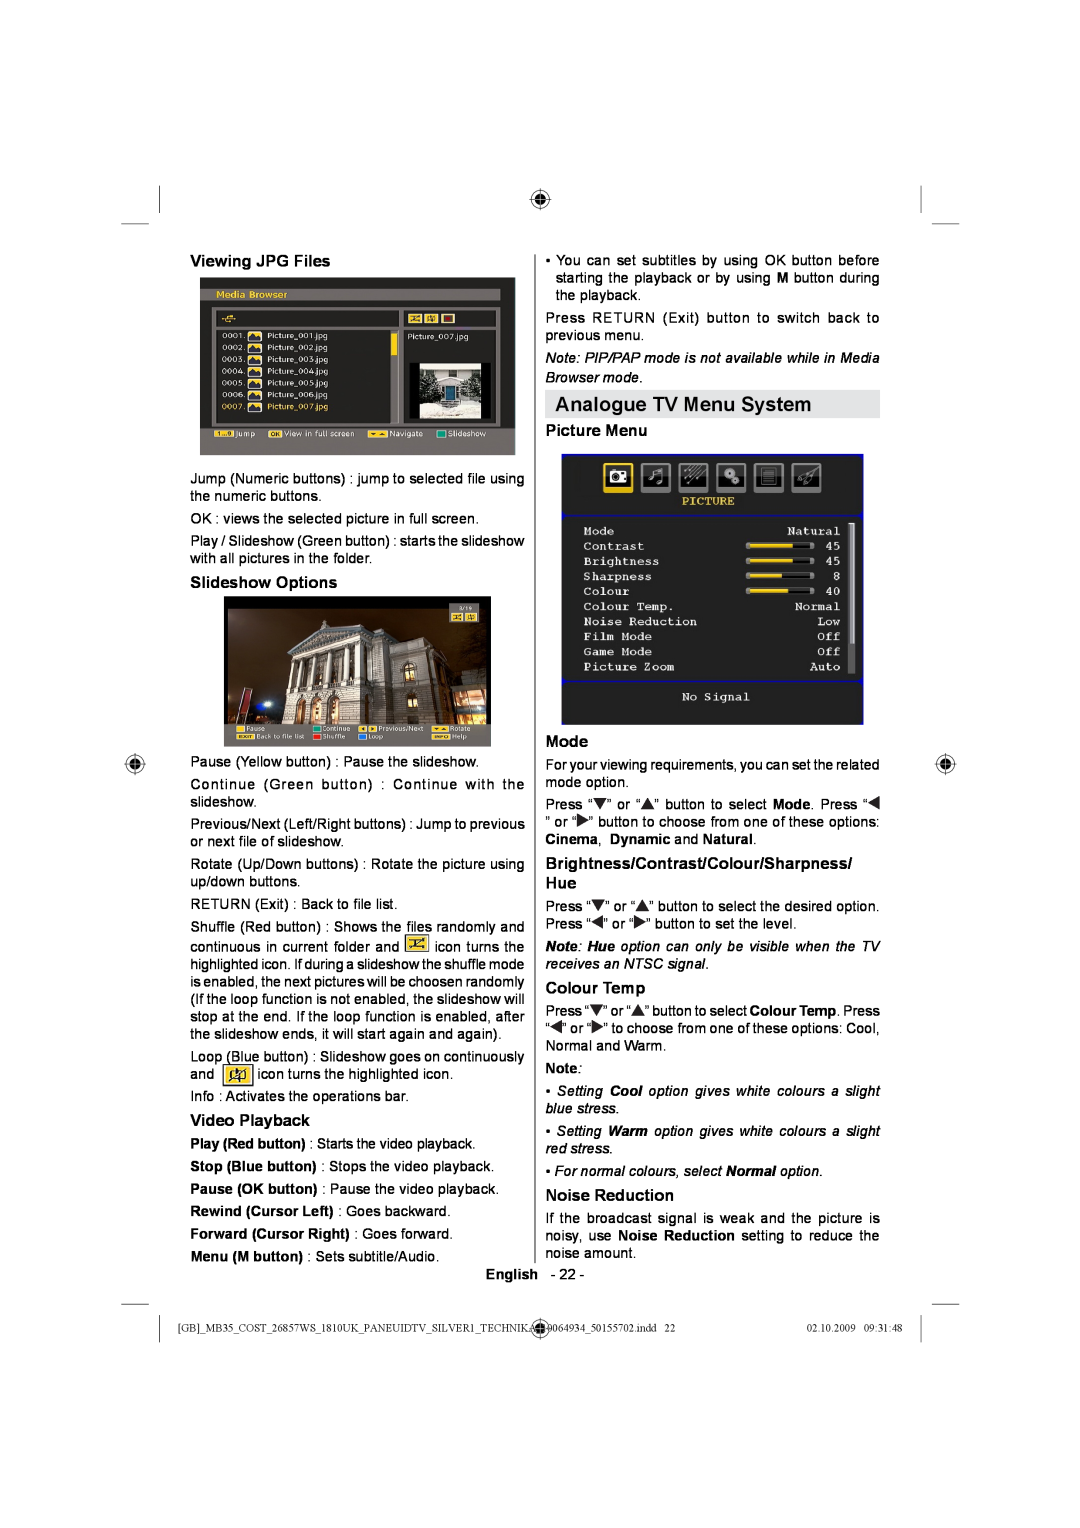 Technika LCD26-920 manual Analogue TV Menu System, Viewing JPG Files, Slideshow Options, Video Playback, Picture Menu Mode 